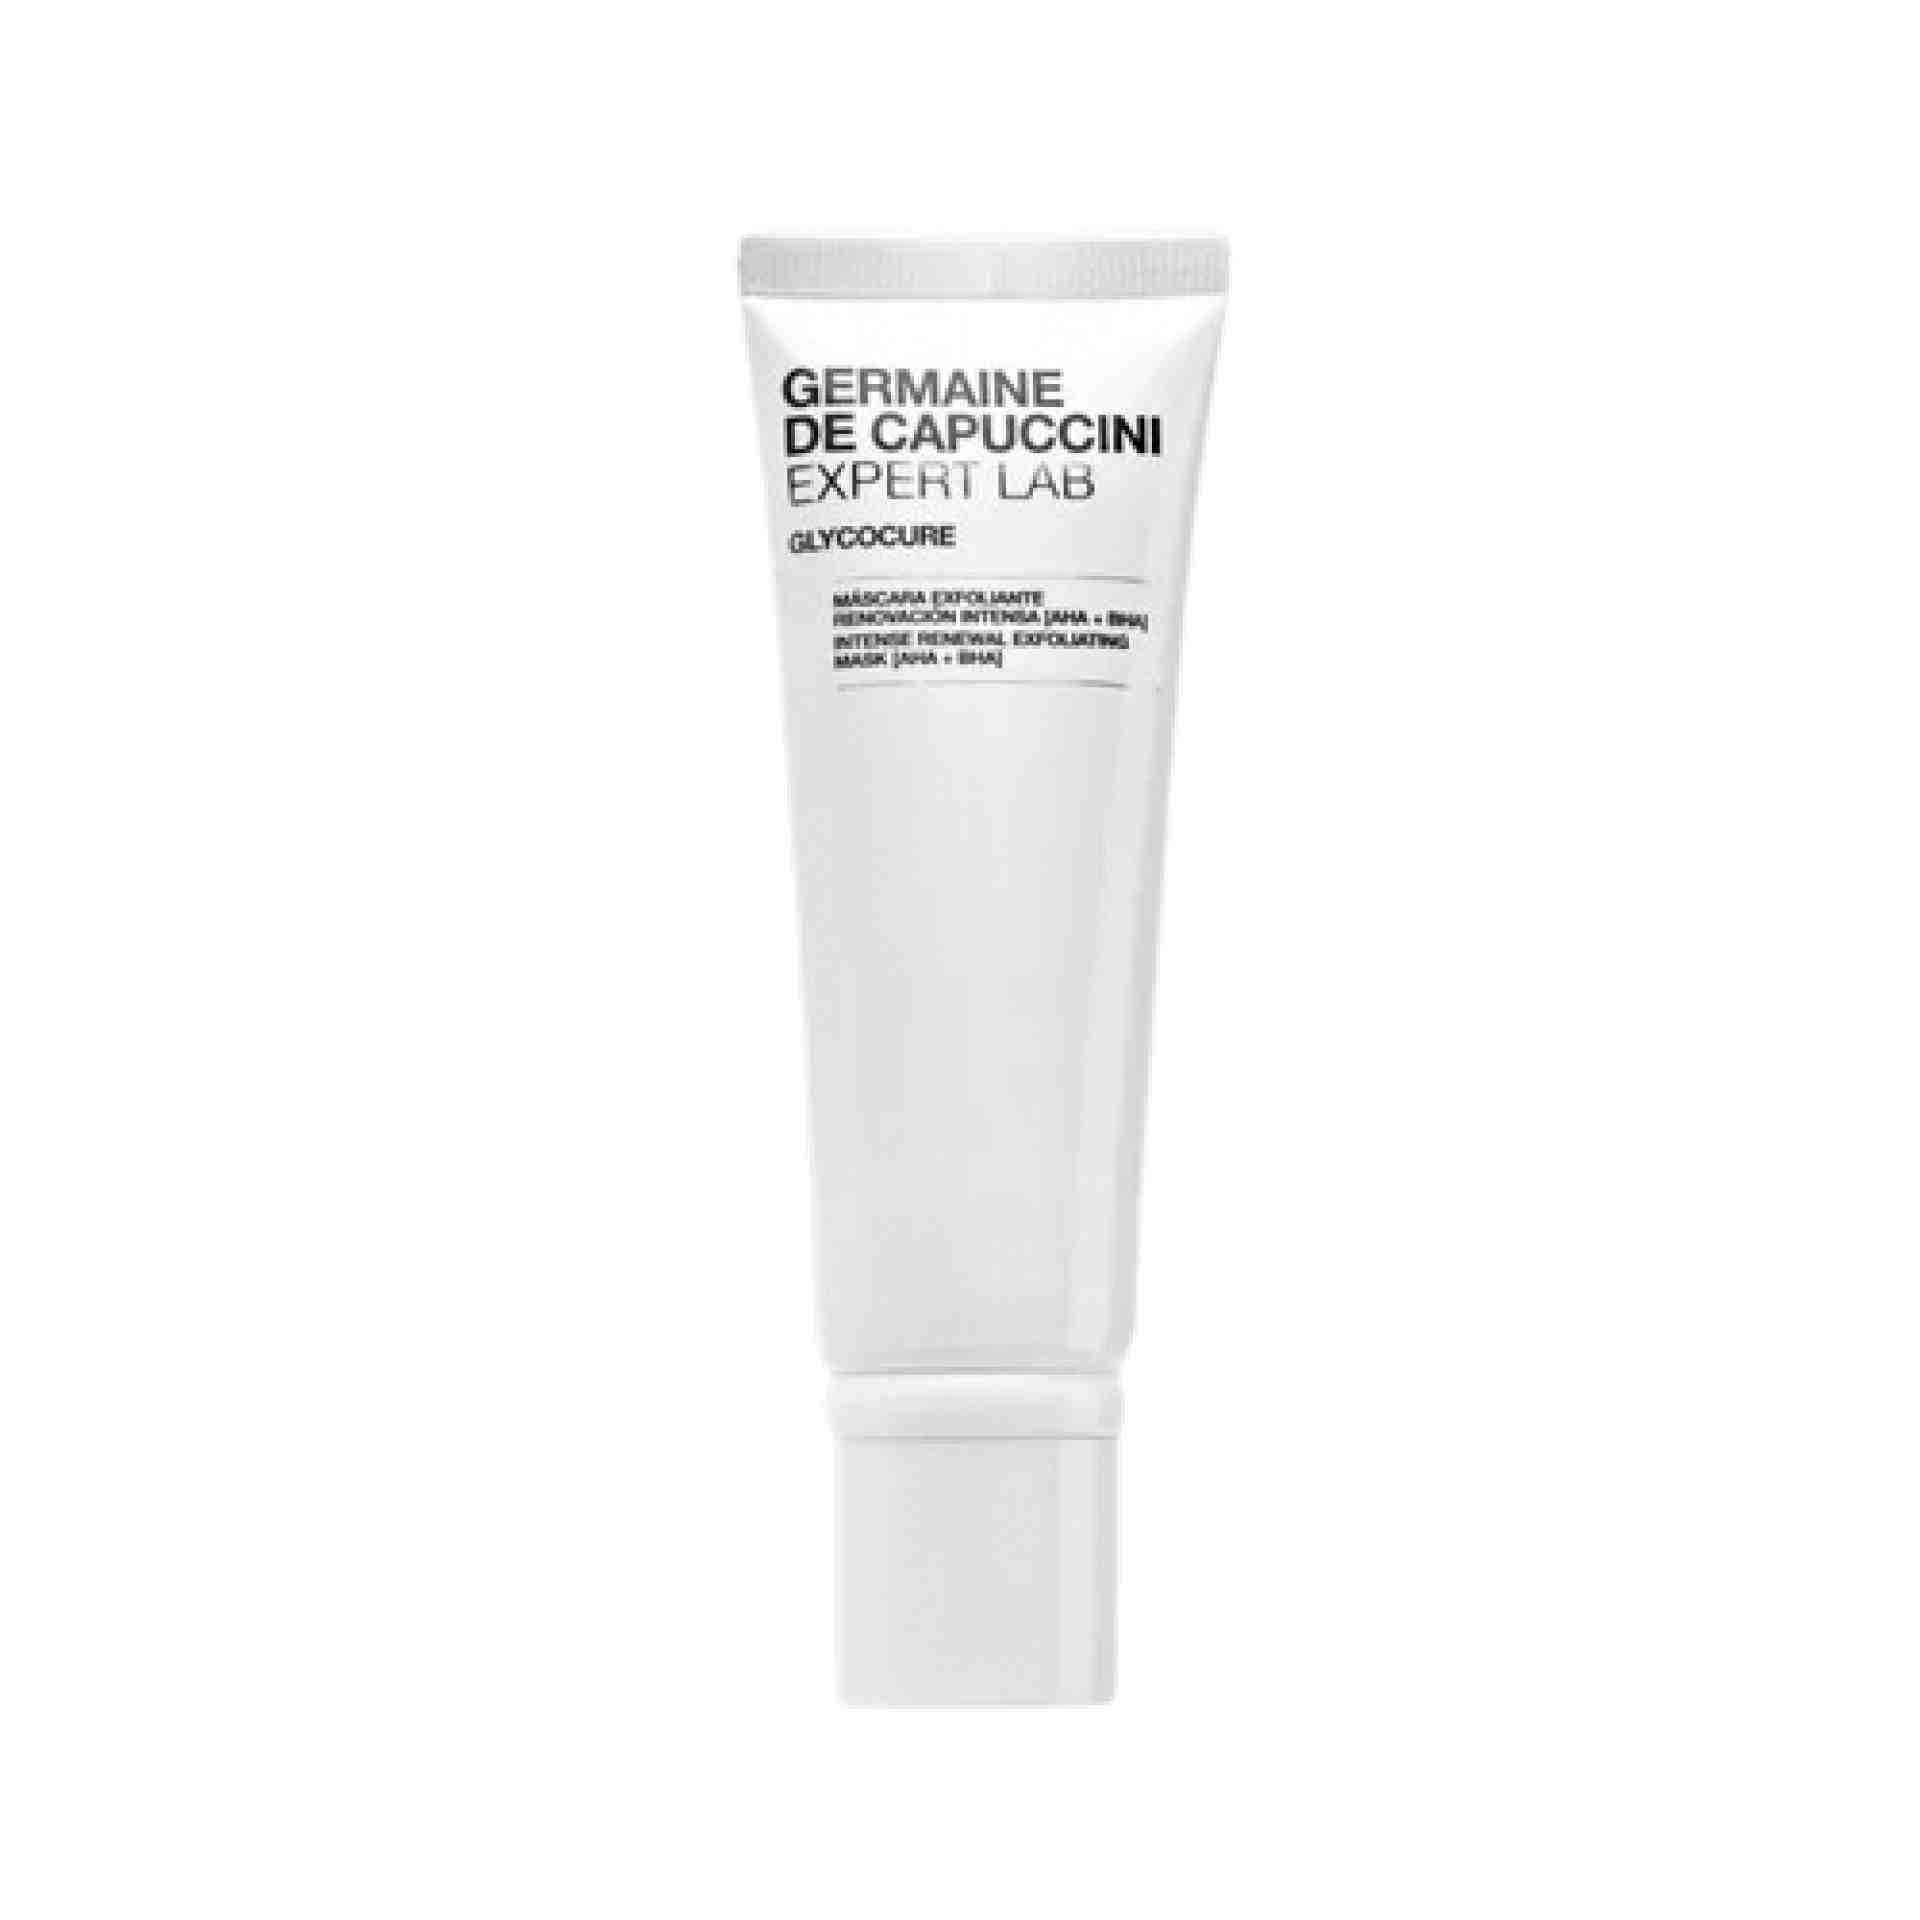 Glycocure Máscara Exfoliante Renovación Intensa 50ml - Expert Lab - Germaine de Capuccini ®